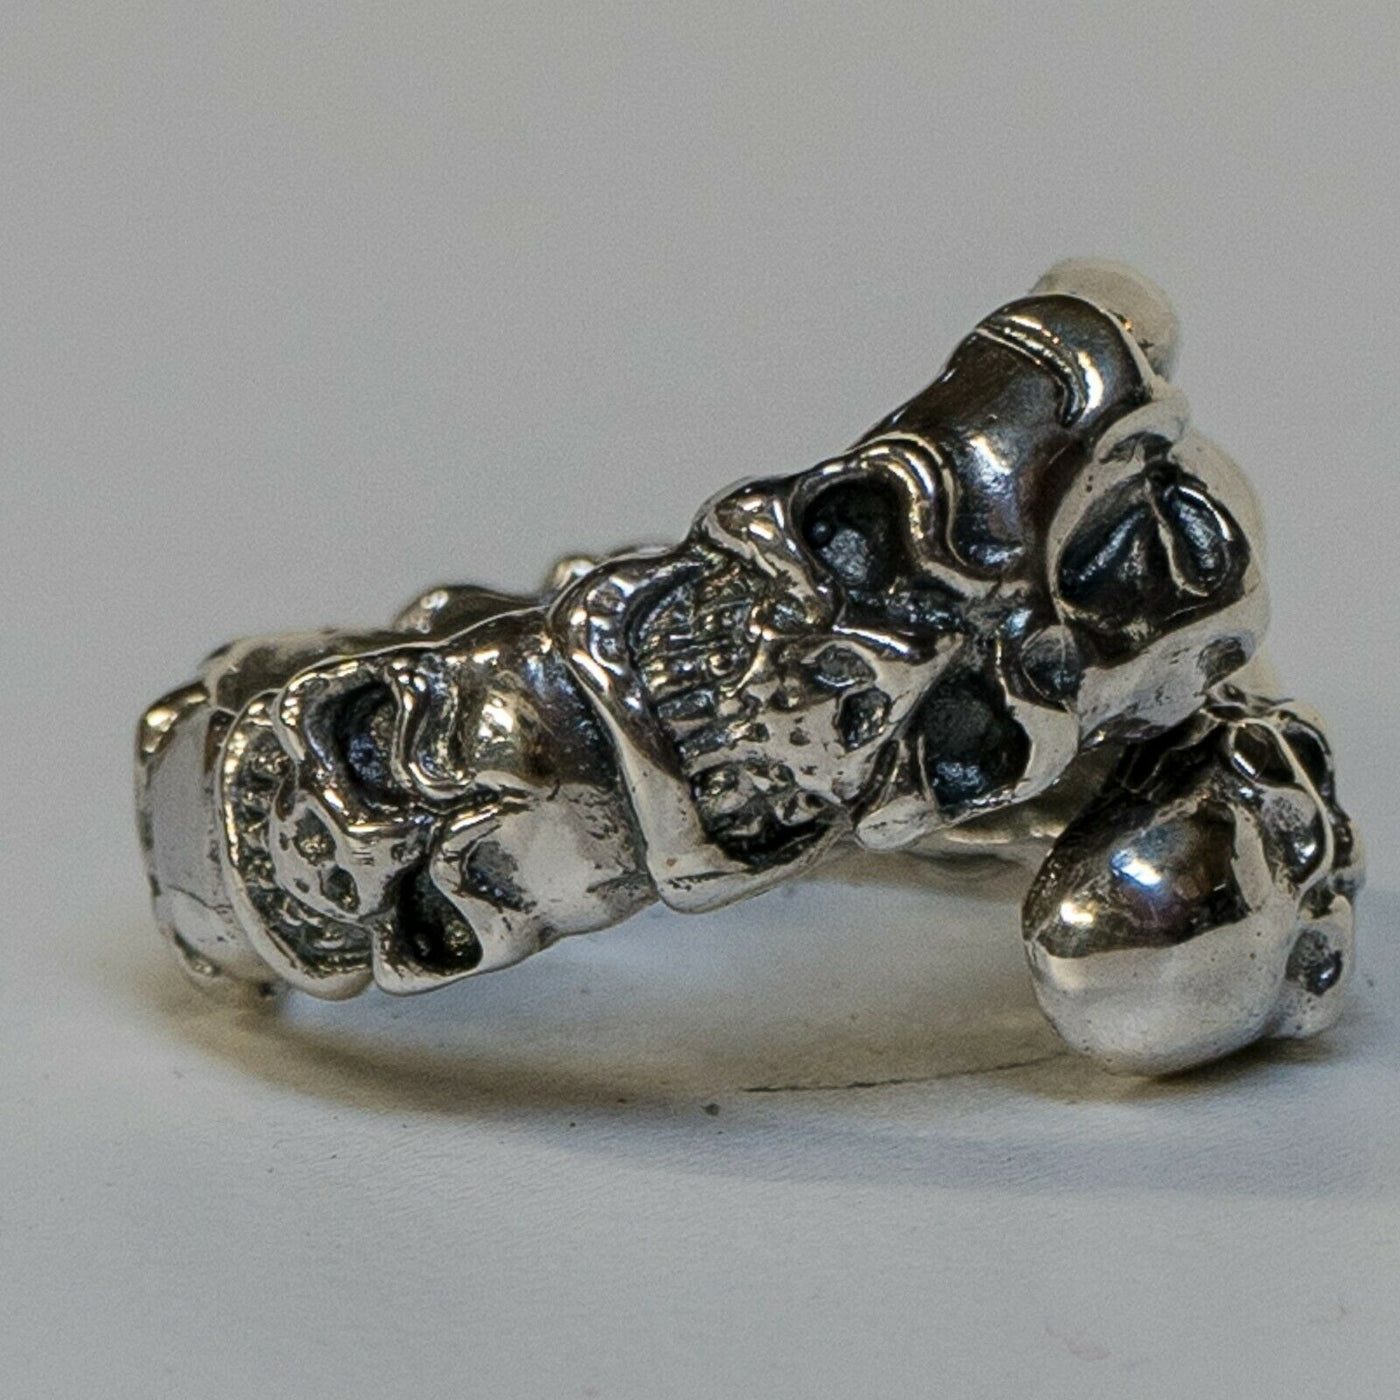 Skull Dragon Claw Ring .925 sterling silver Metal Biker Gothic Punk feeanddave